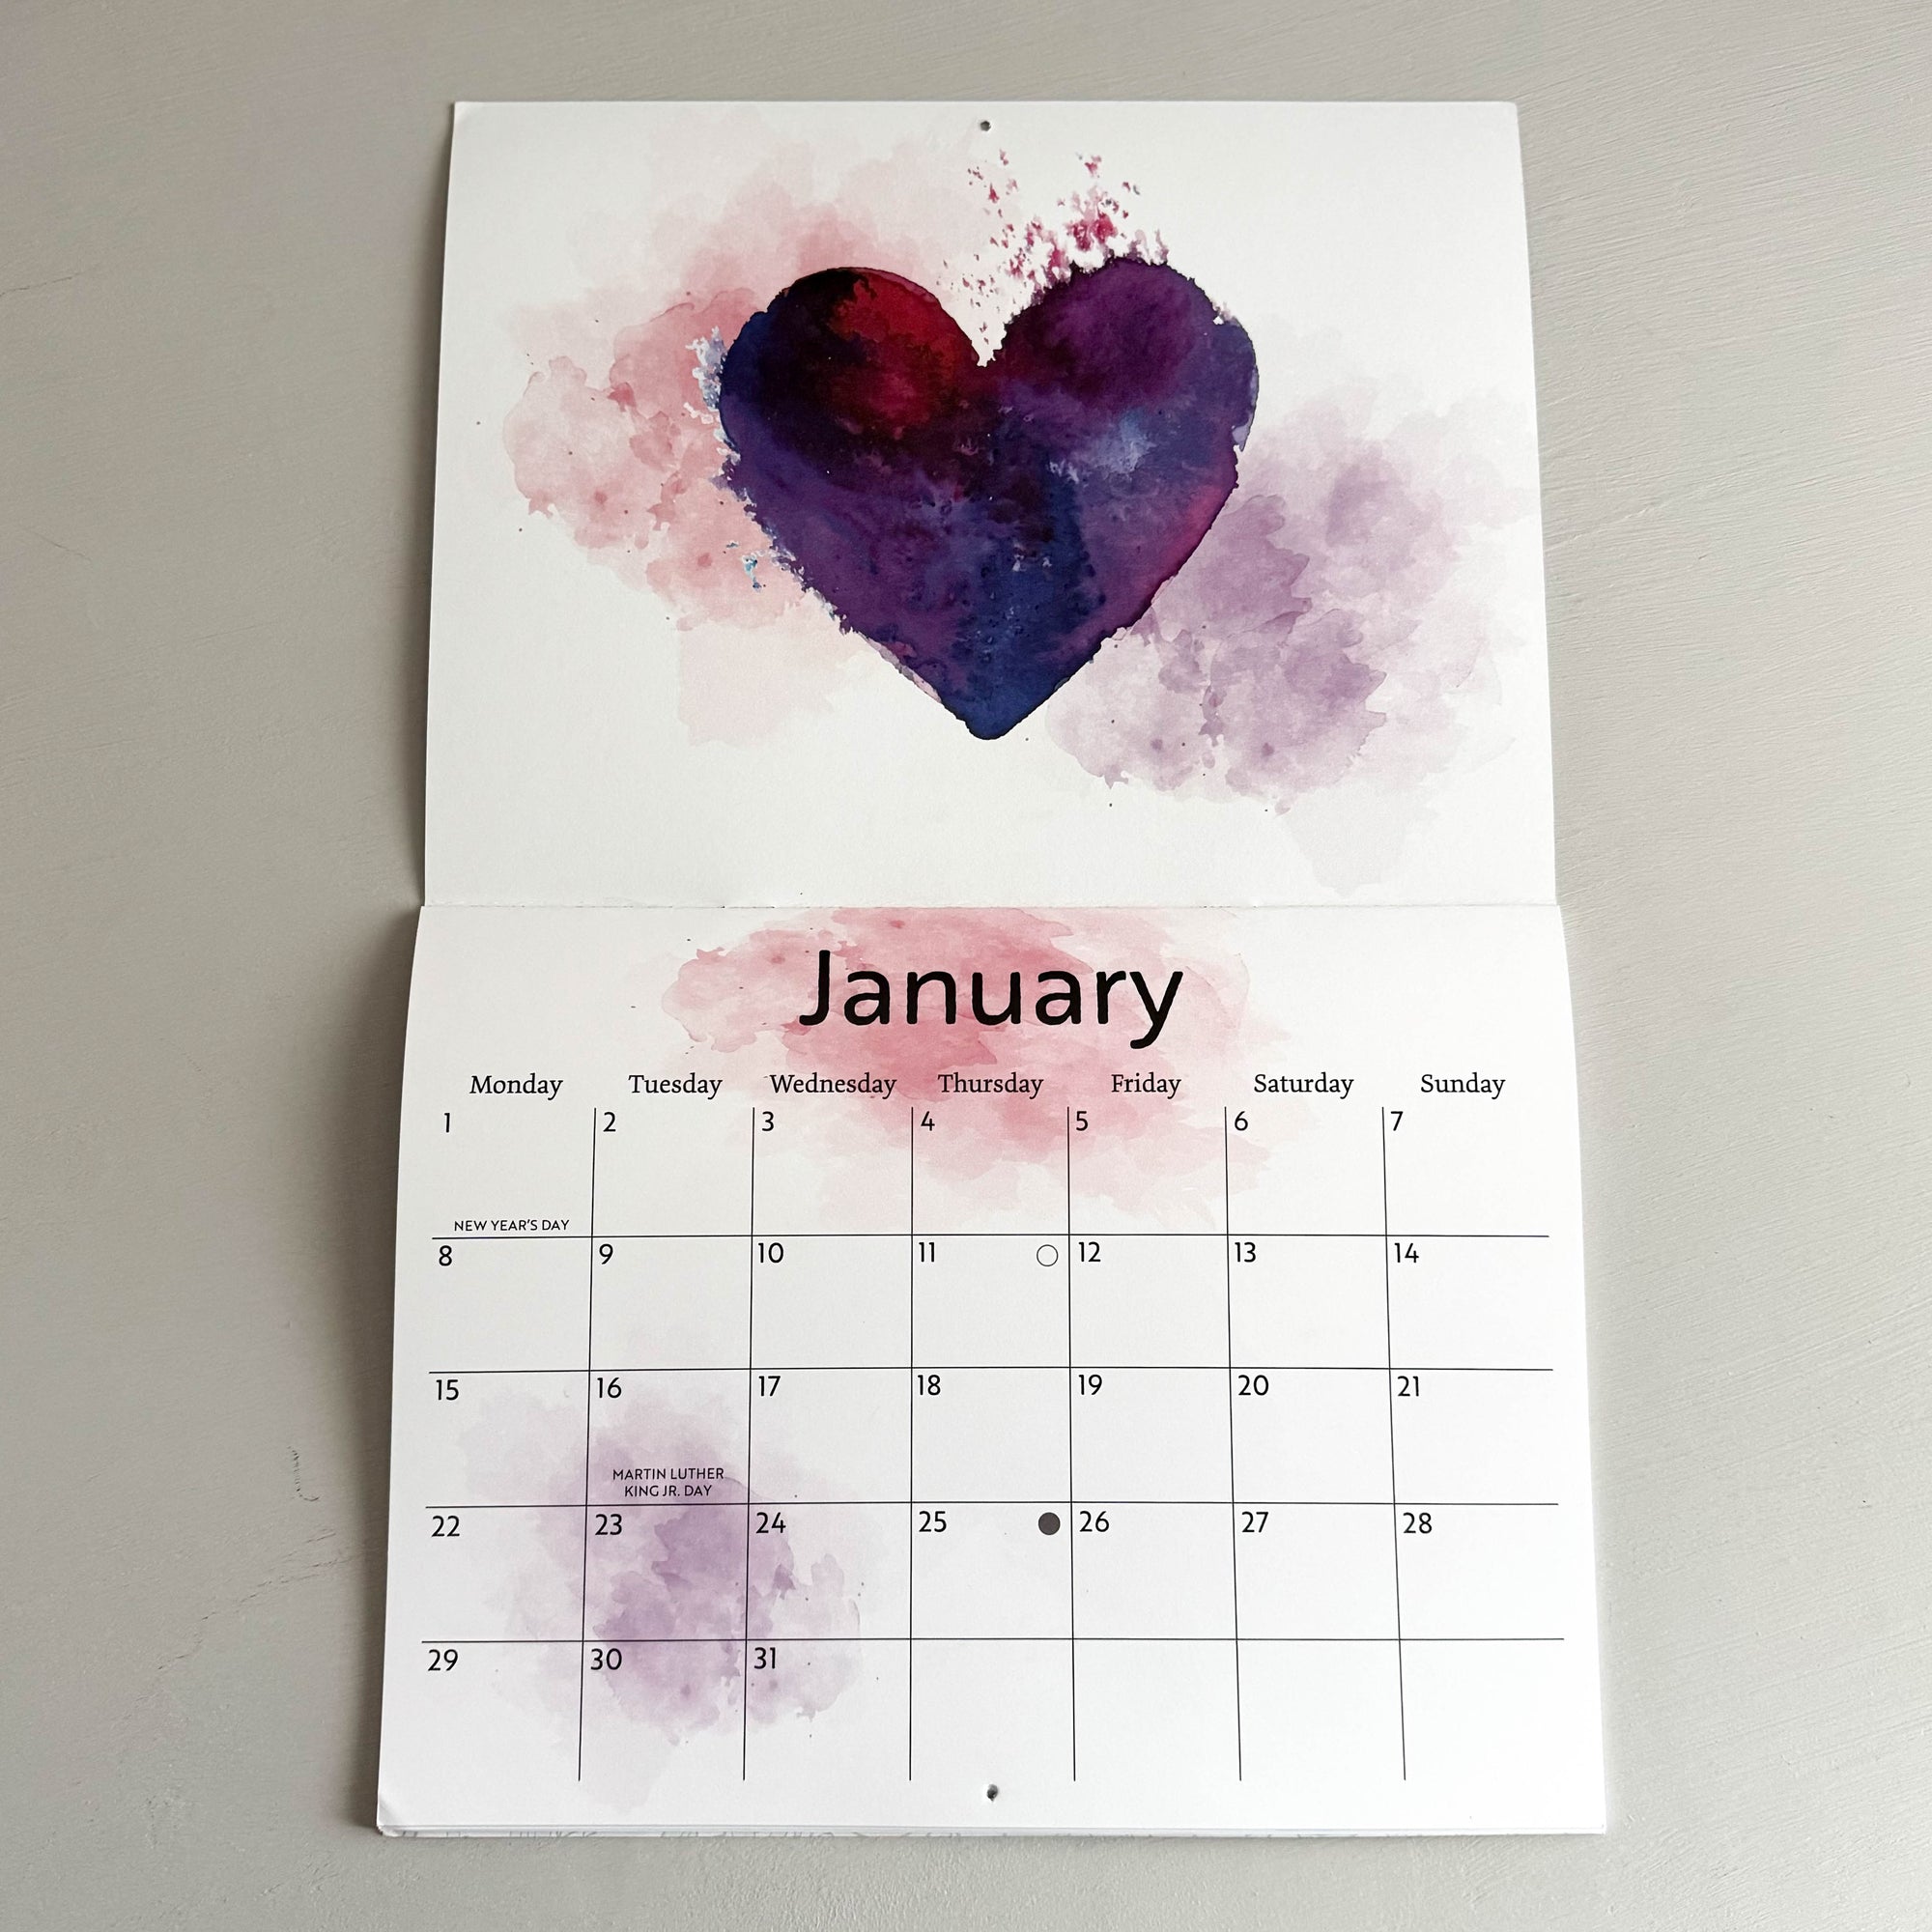 Heartfelt Hues Calendar